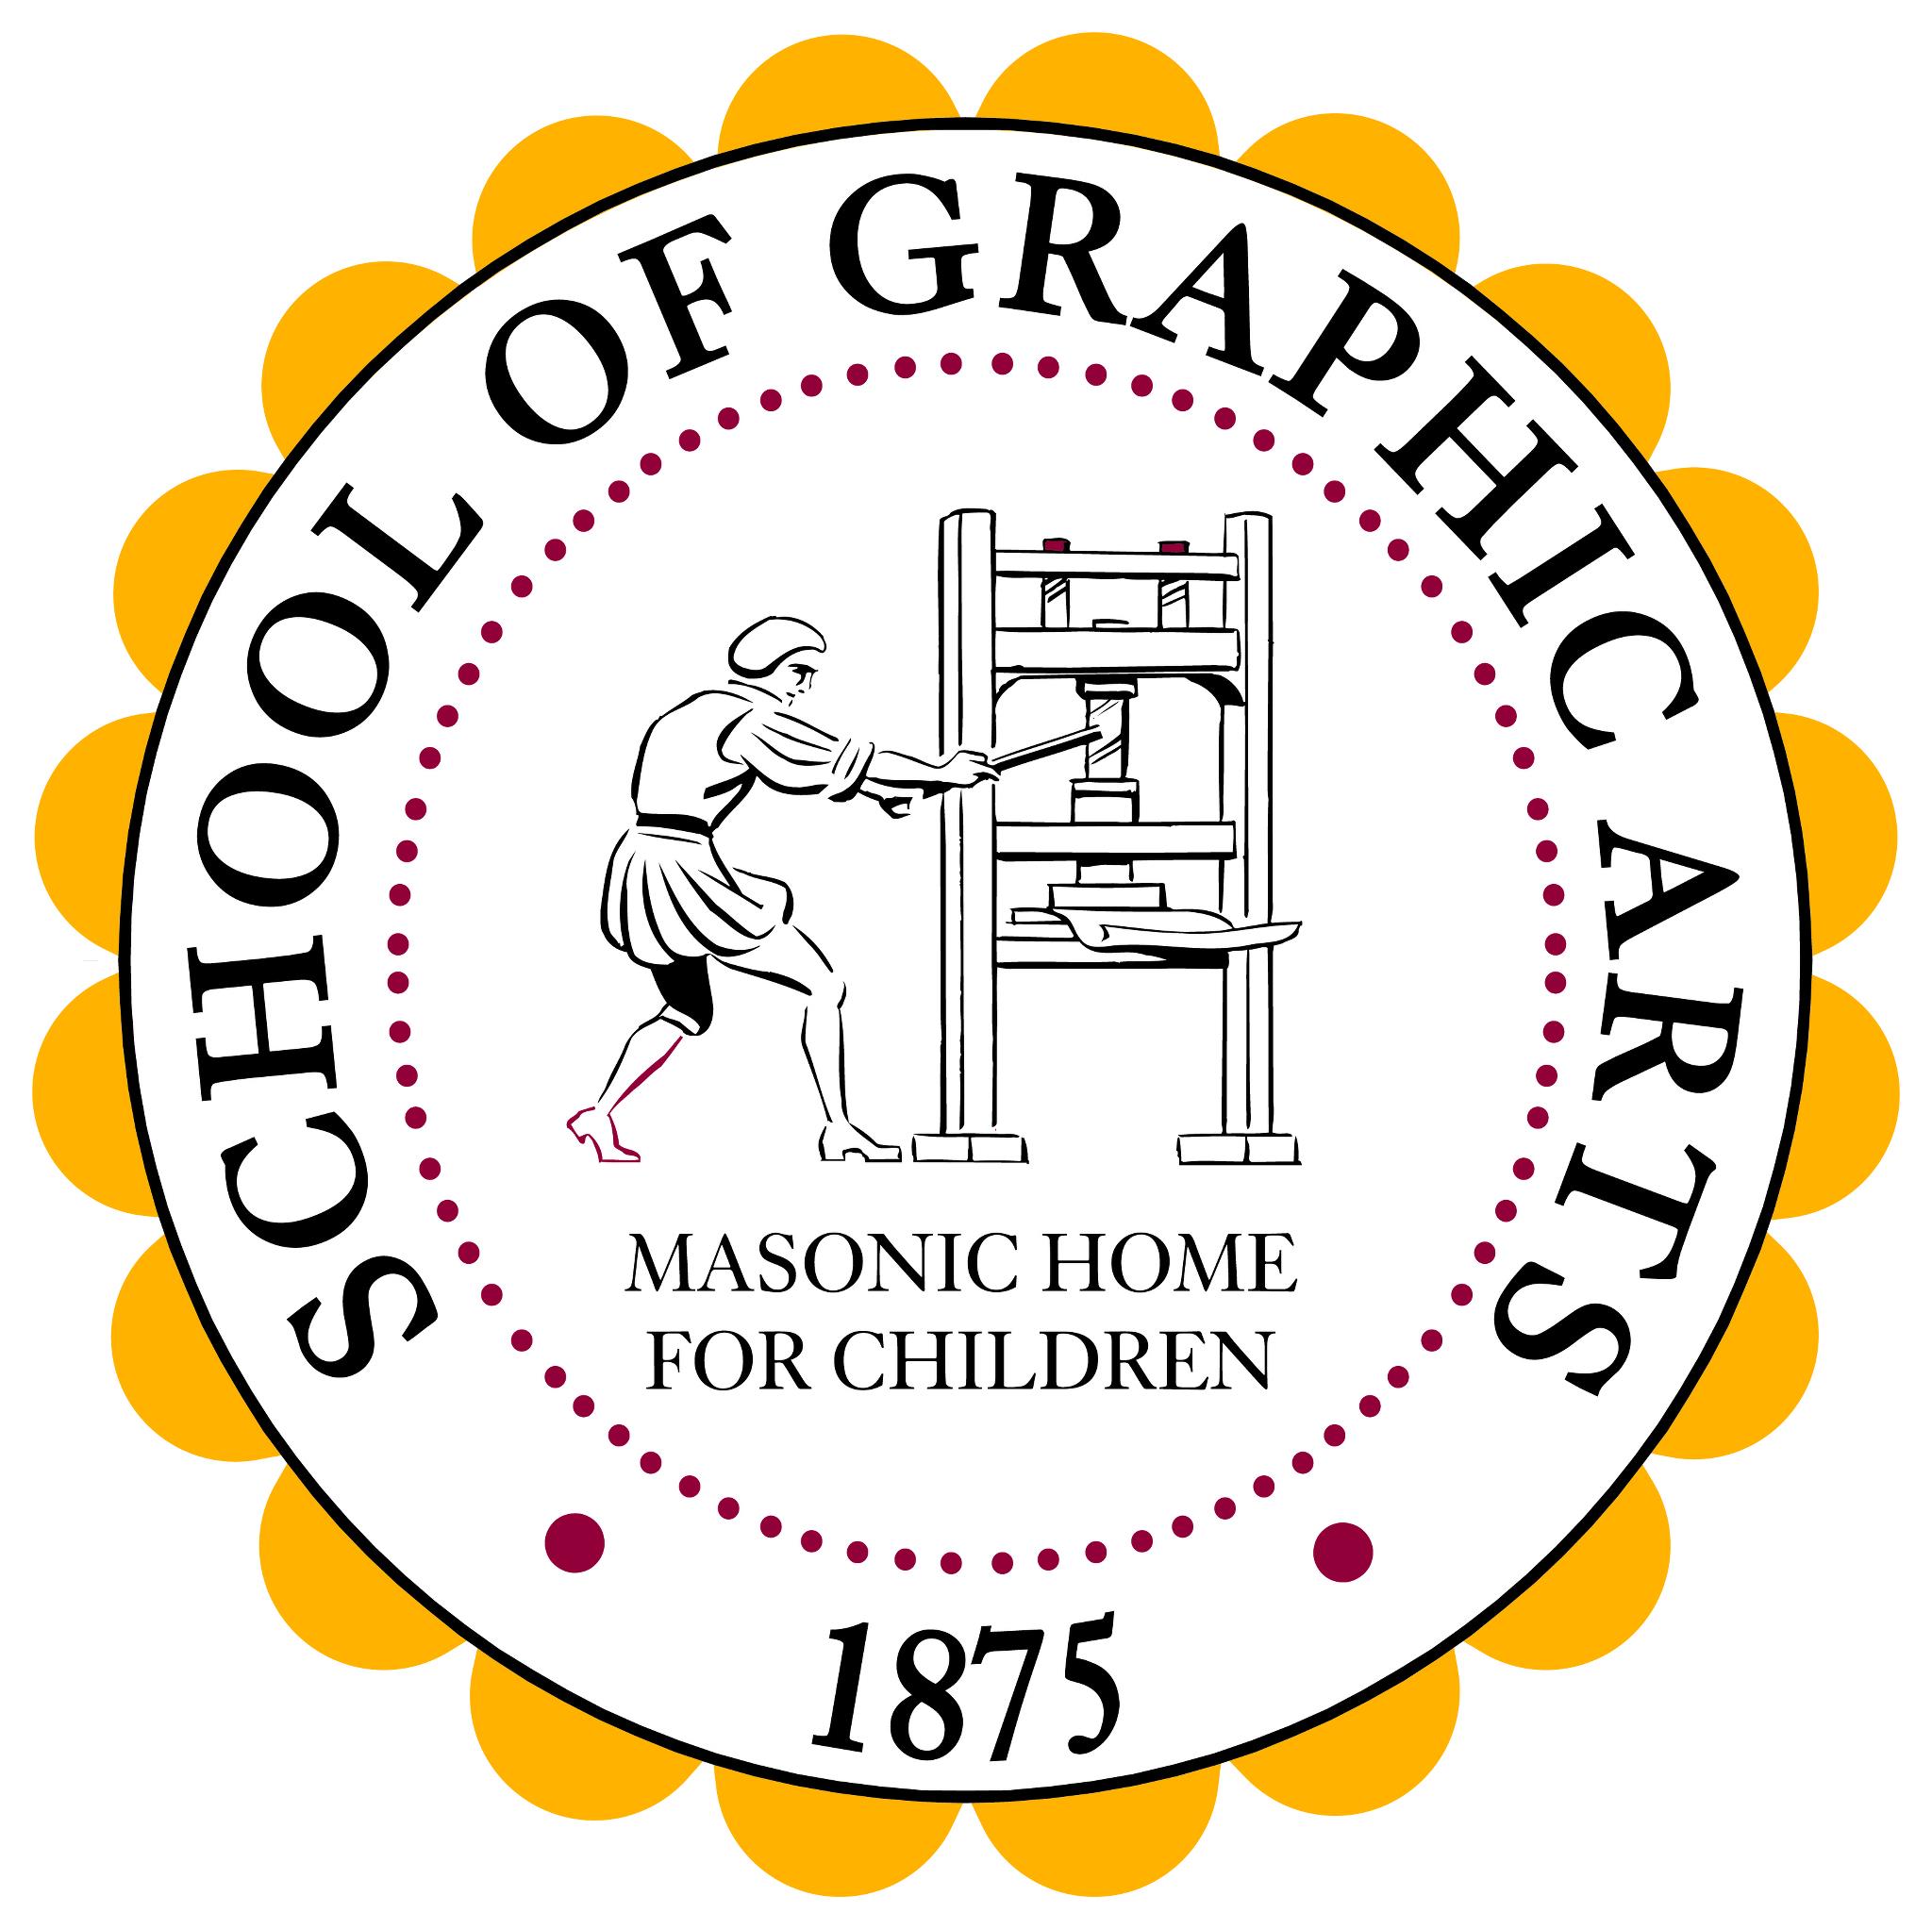 School of Graphic Arts 1875